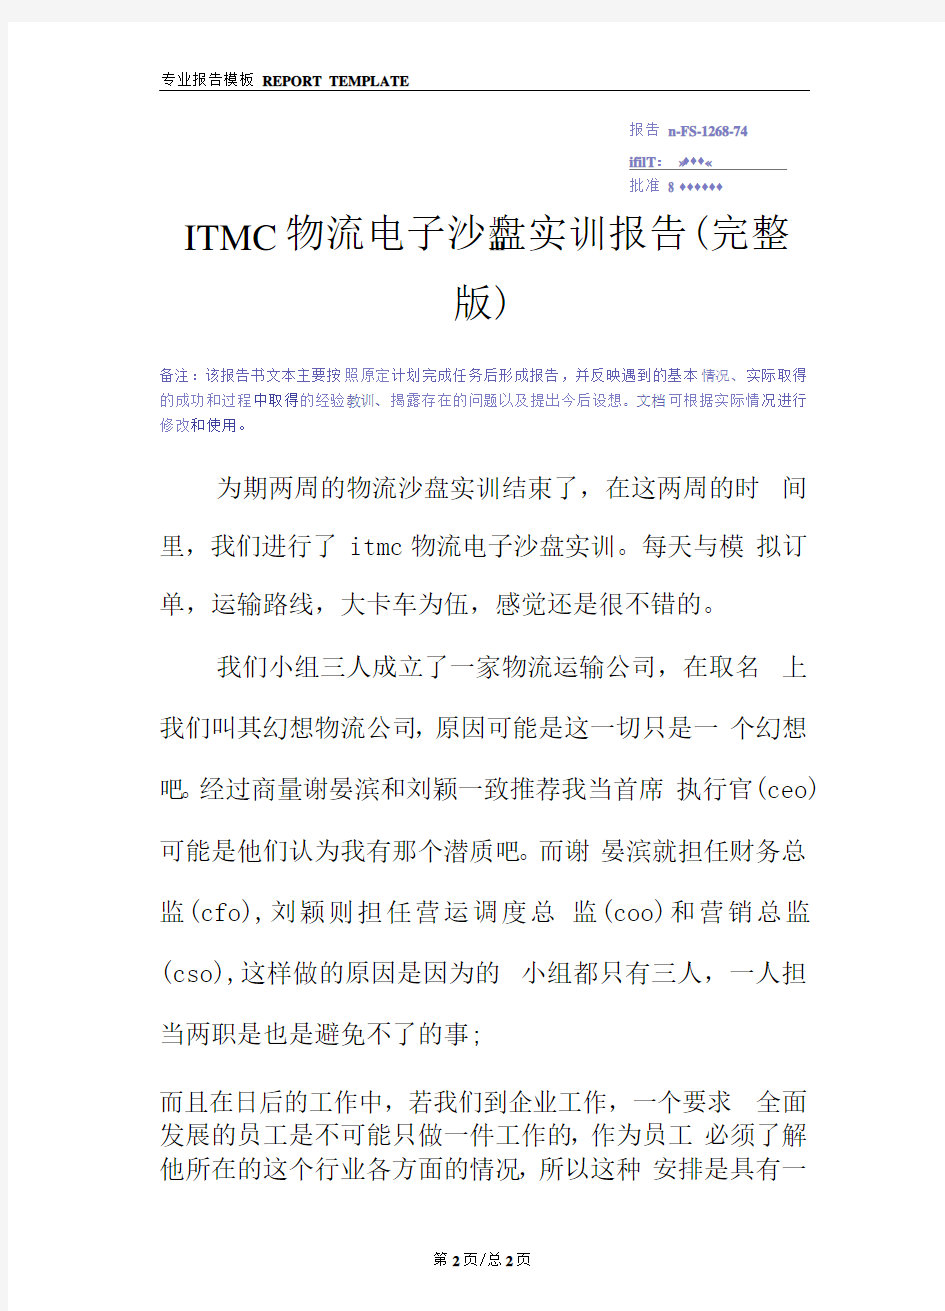 ITMC物流电子沙盘实训报告(完整版)